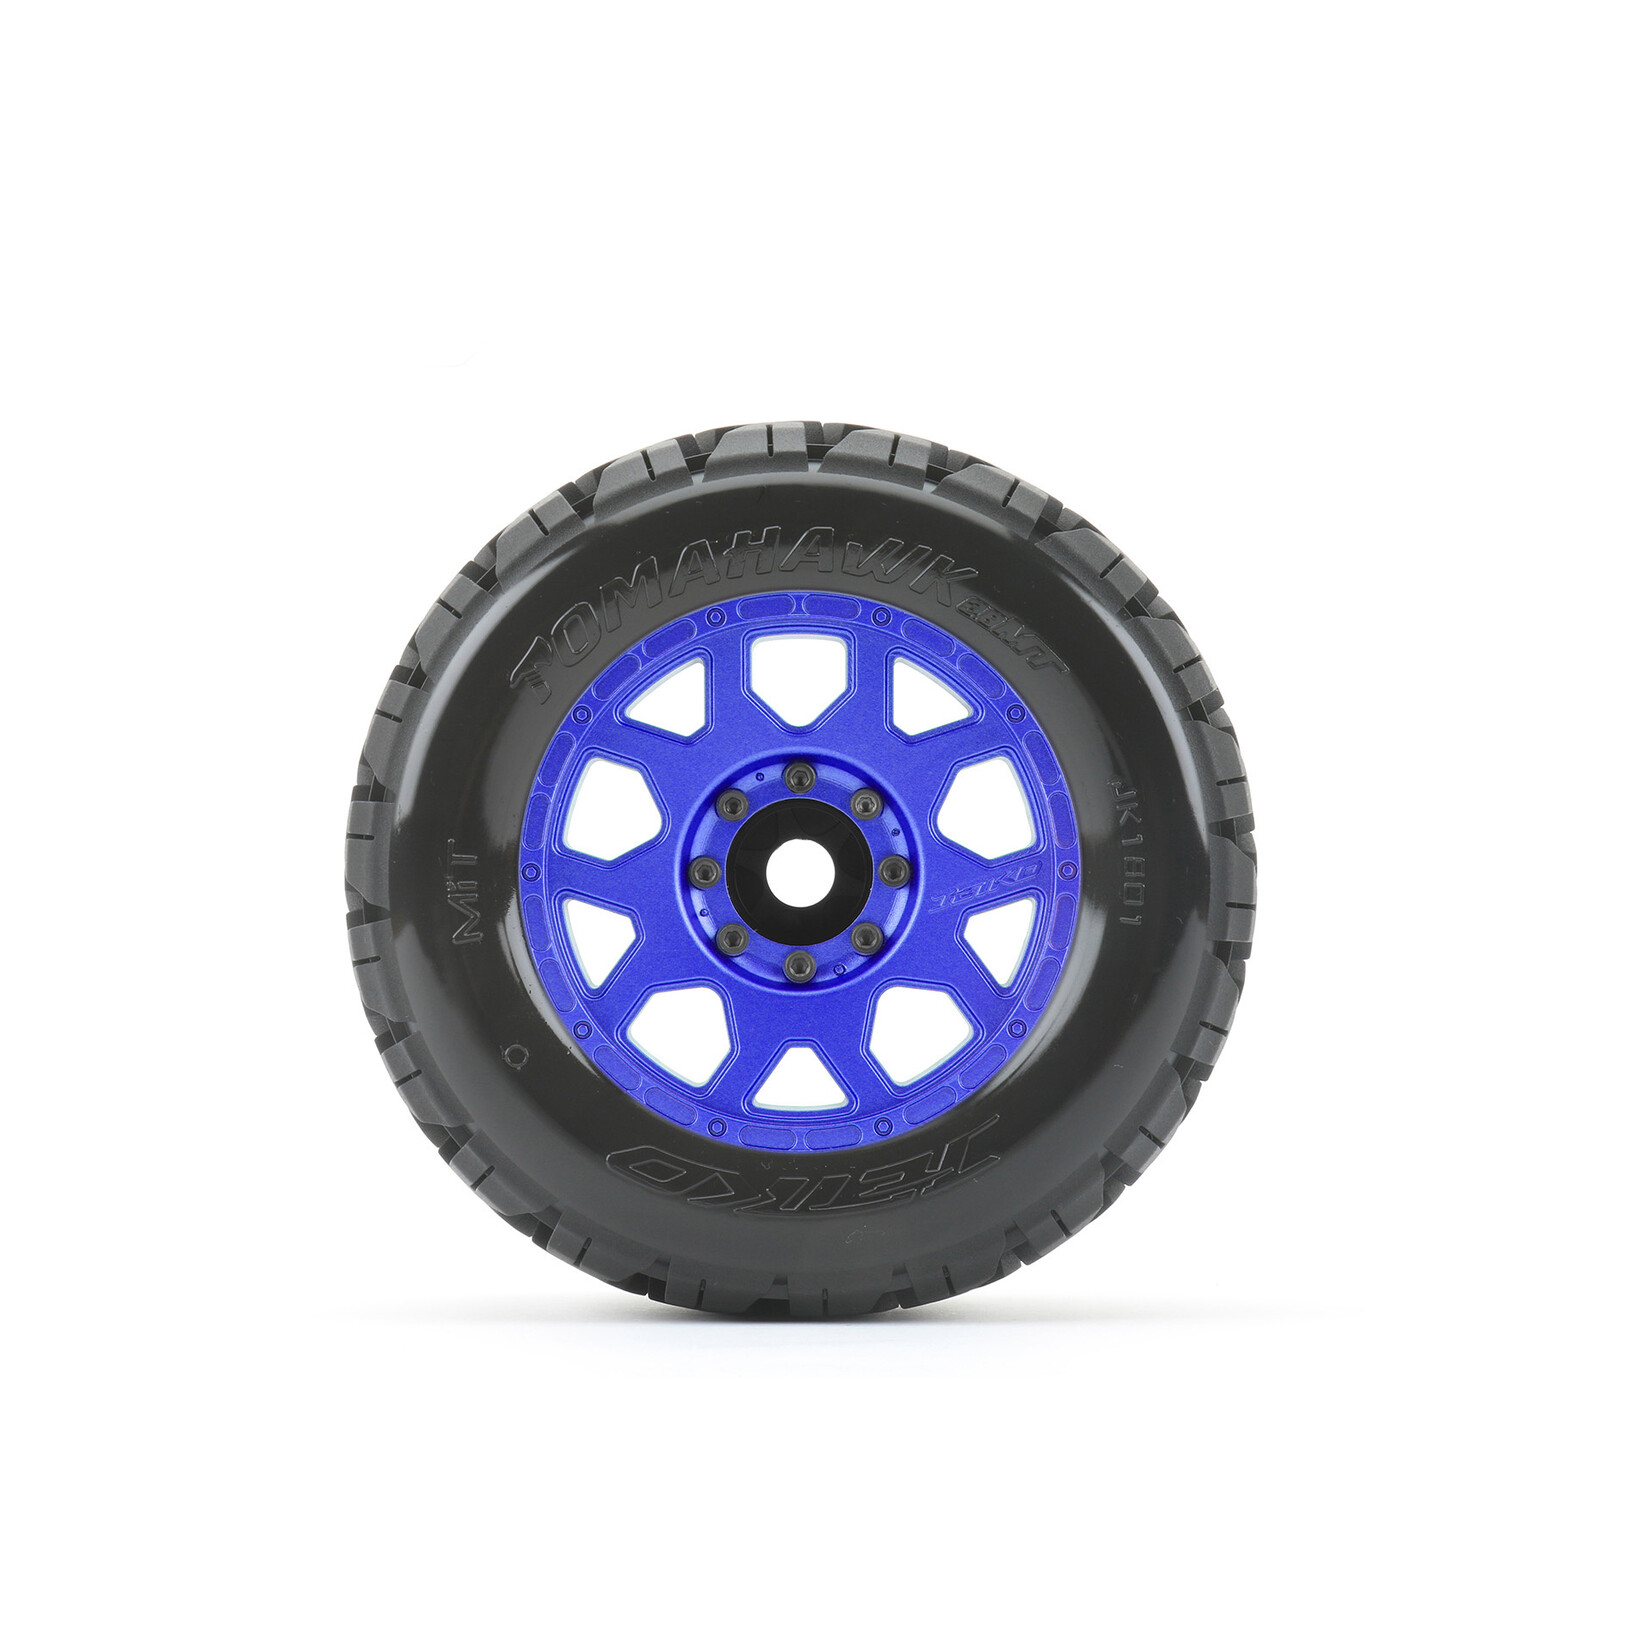 Jetko Tires Jetko Tires 1/8 MT 3.8" EX-Tomahawk Pre-Mounted Tires (Blue) #JKO1801CLMSGBB2